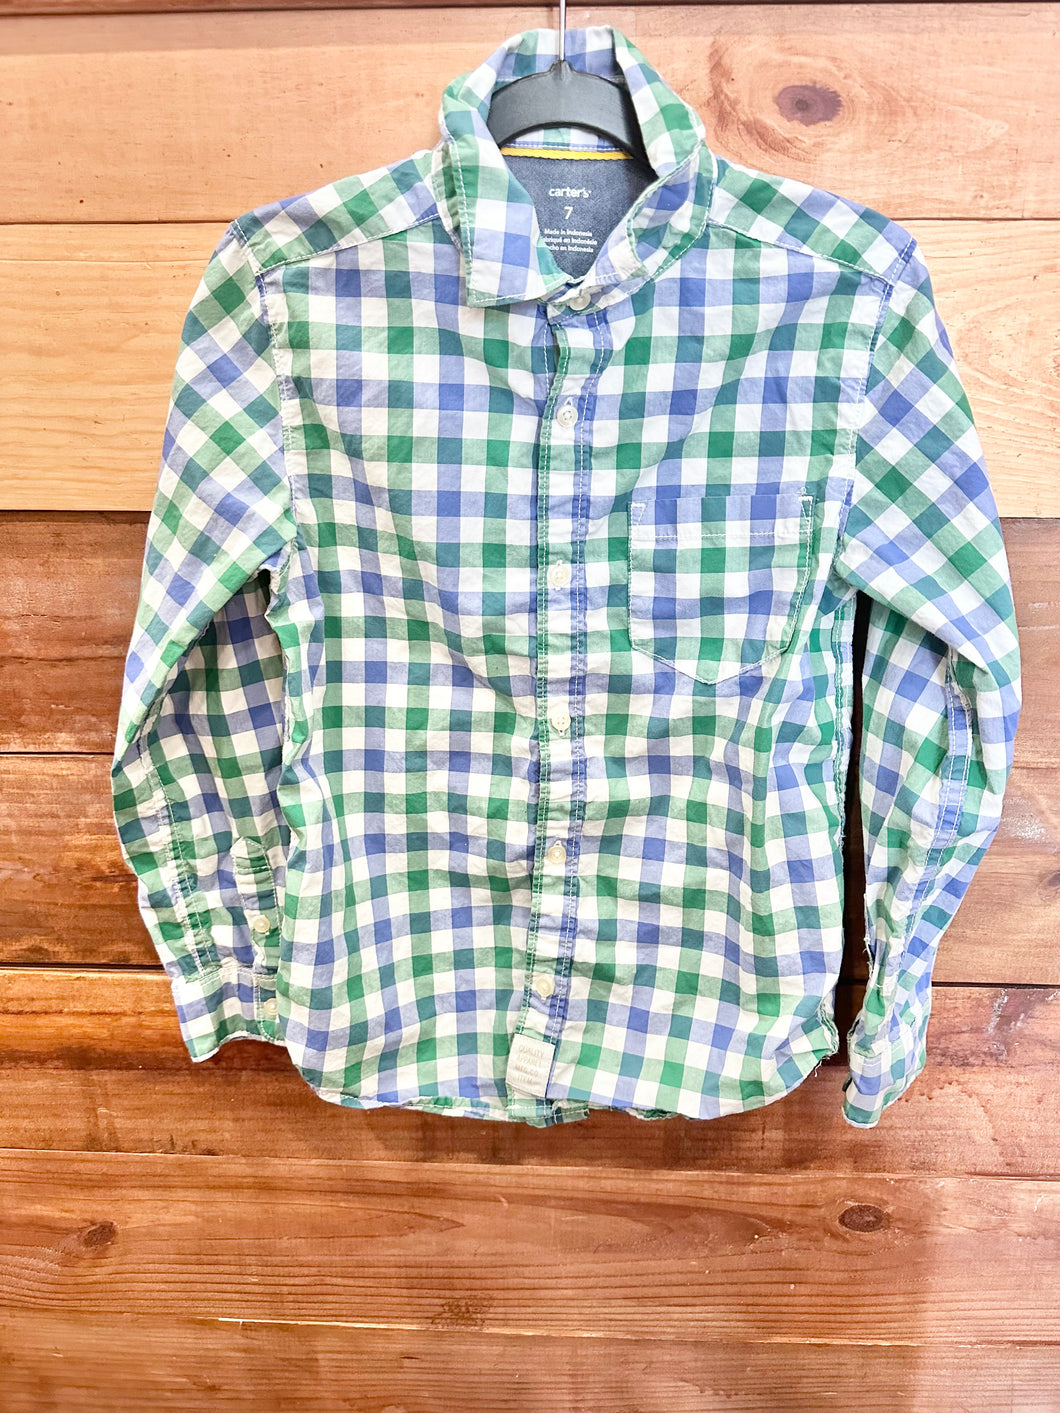 Carters Green Plaid Shirt Size 7